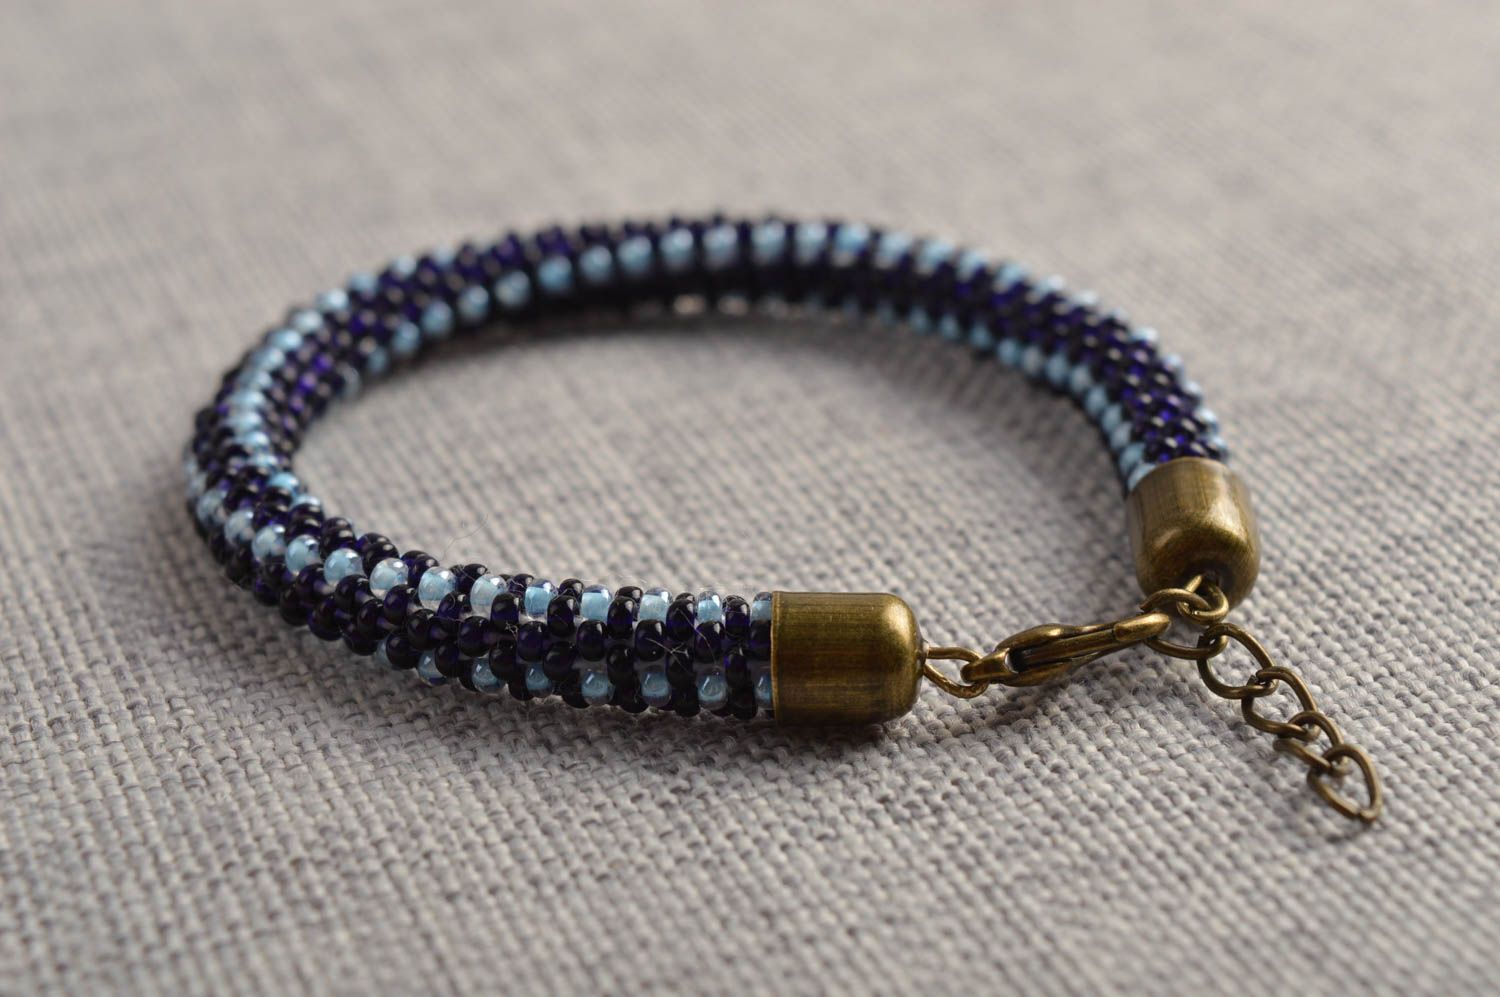 Black and blue beads cord adjustable bracelet for girls photo 1